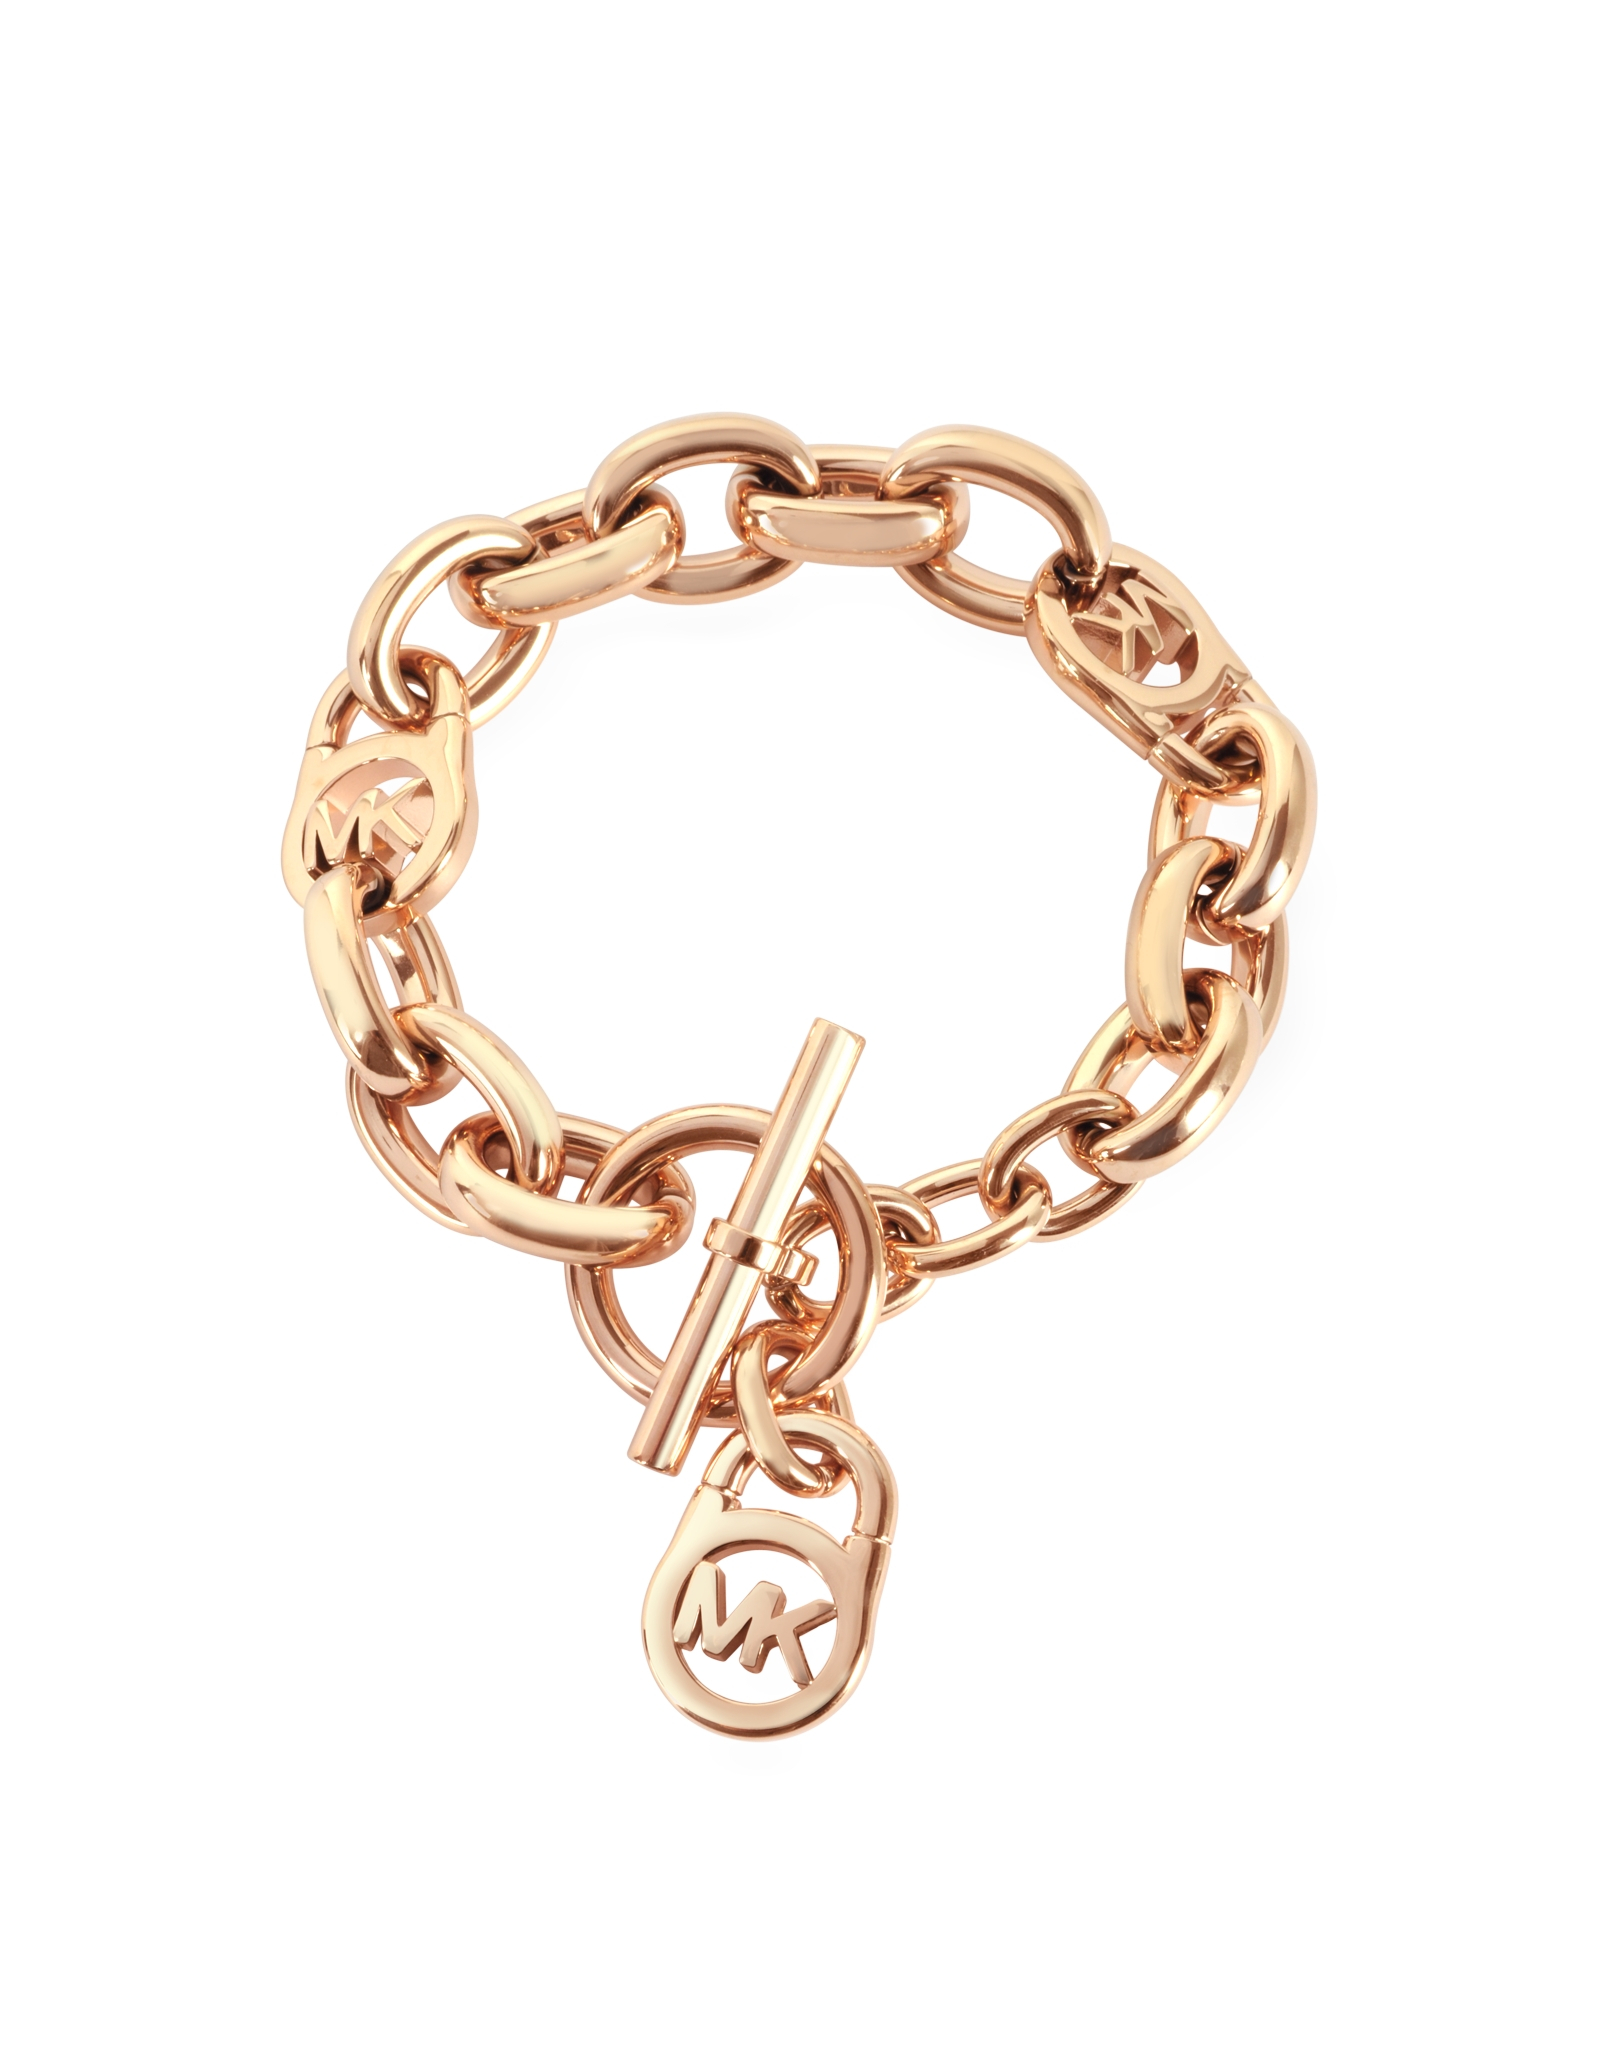 michael kors rose gold bracelet with heart